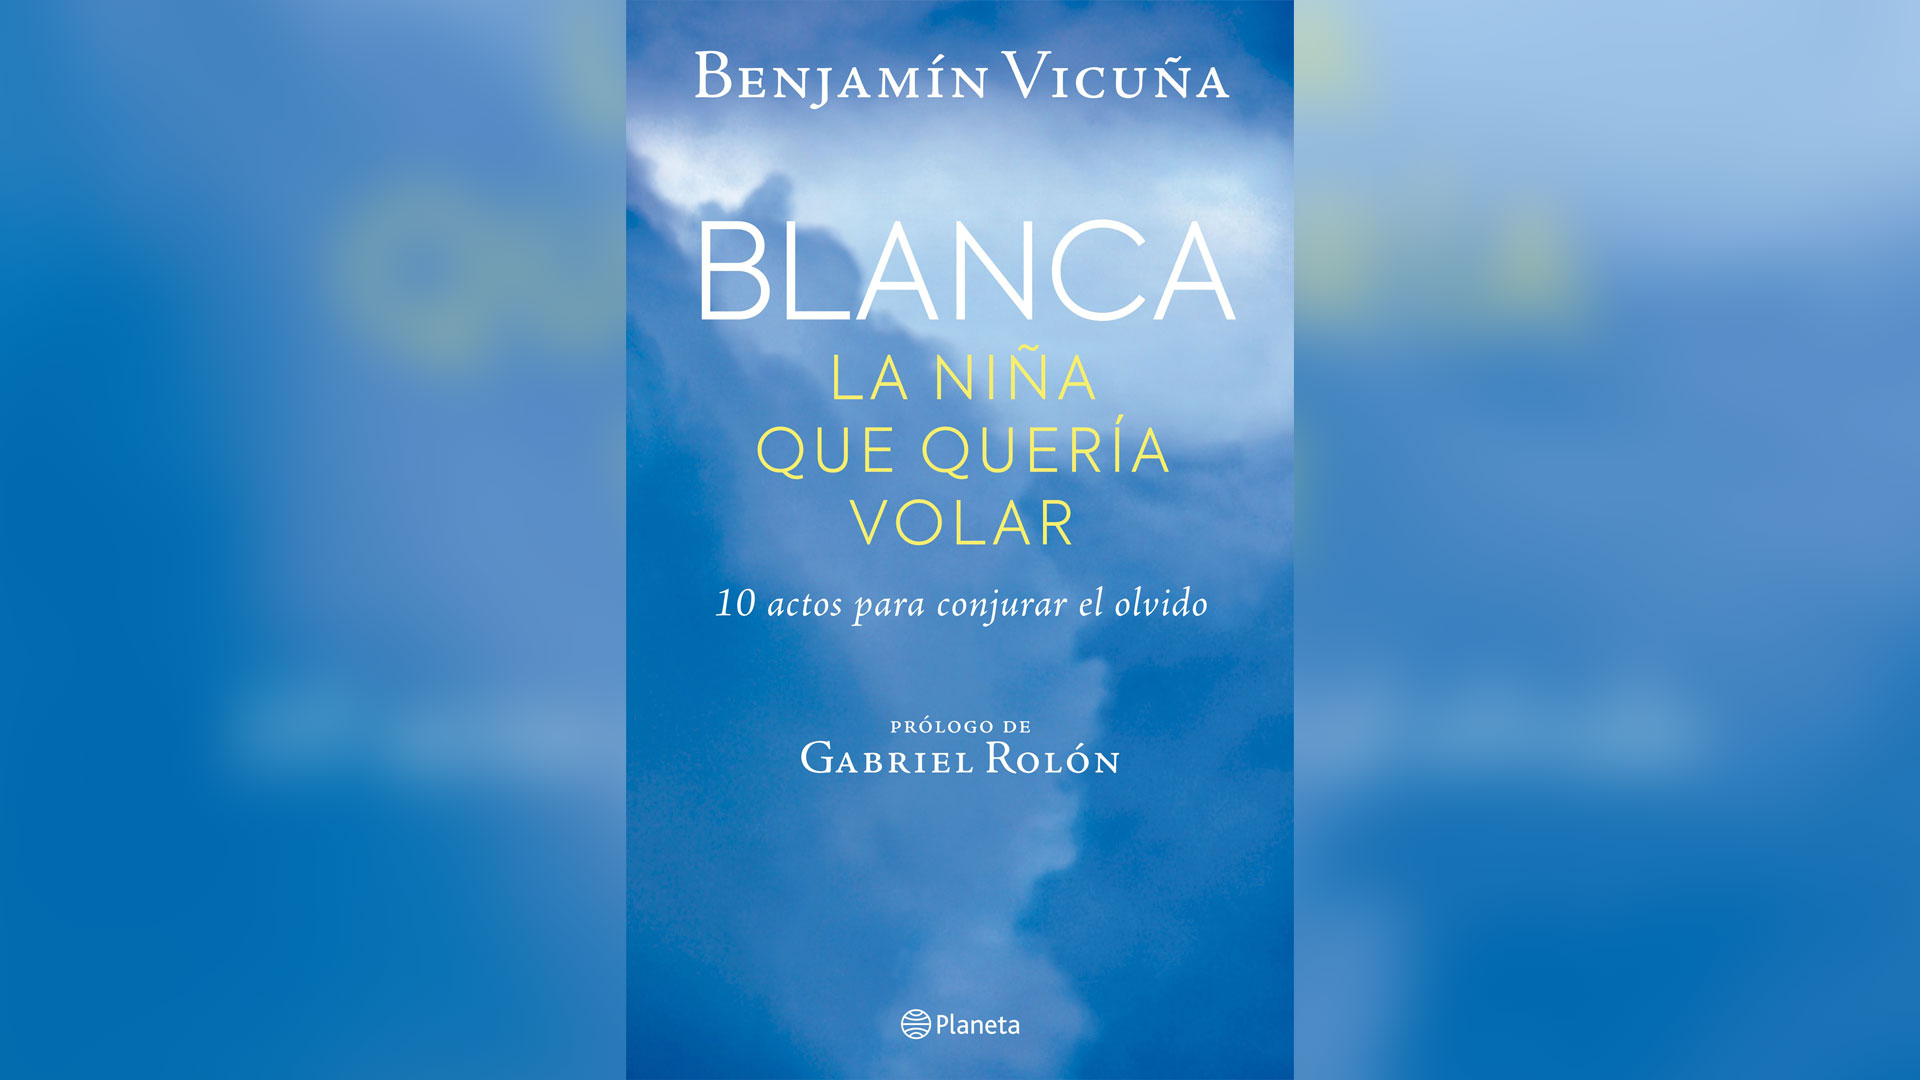 Portada de "Blanca, la niña que quería volar", de Banjamín Vicuña, editado por Planeta.